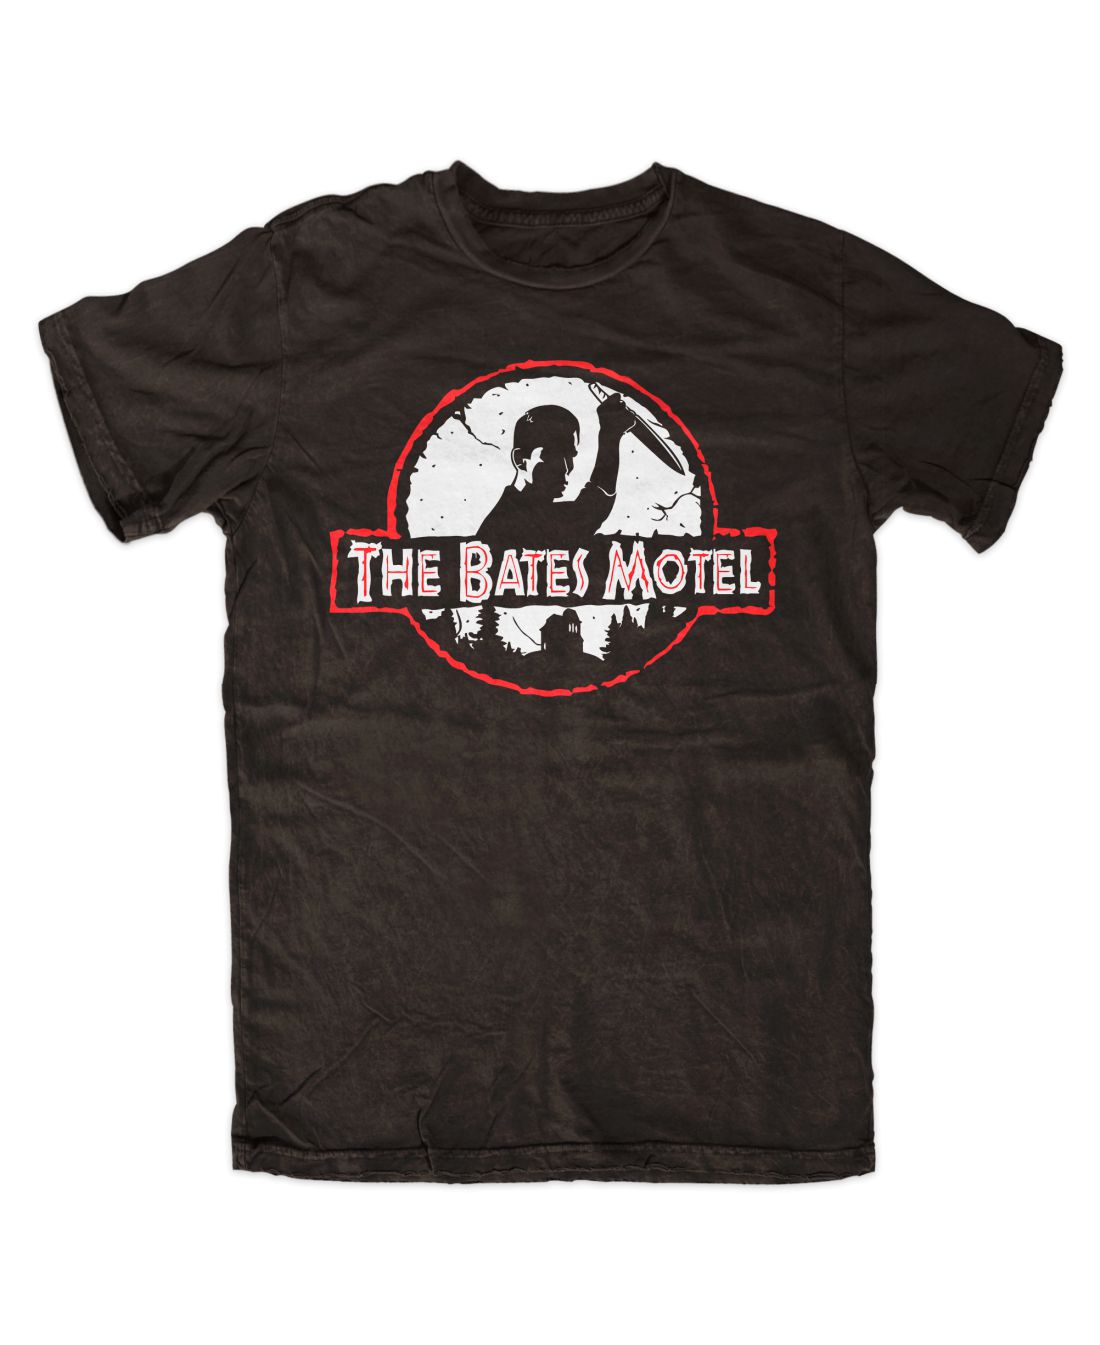 The Bates Motel (dark chocolate póló)